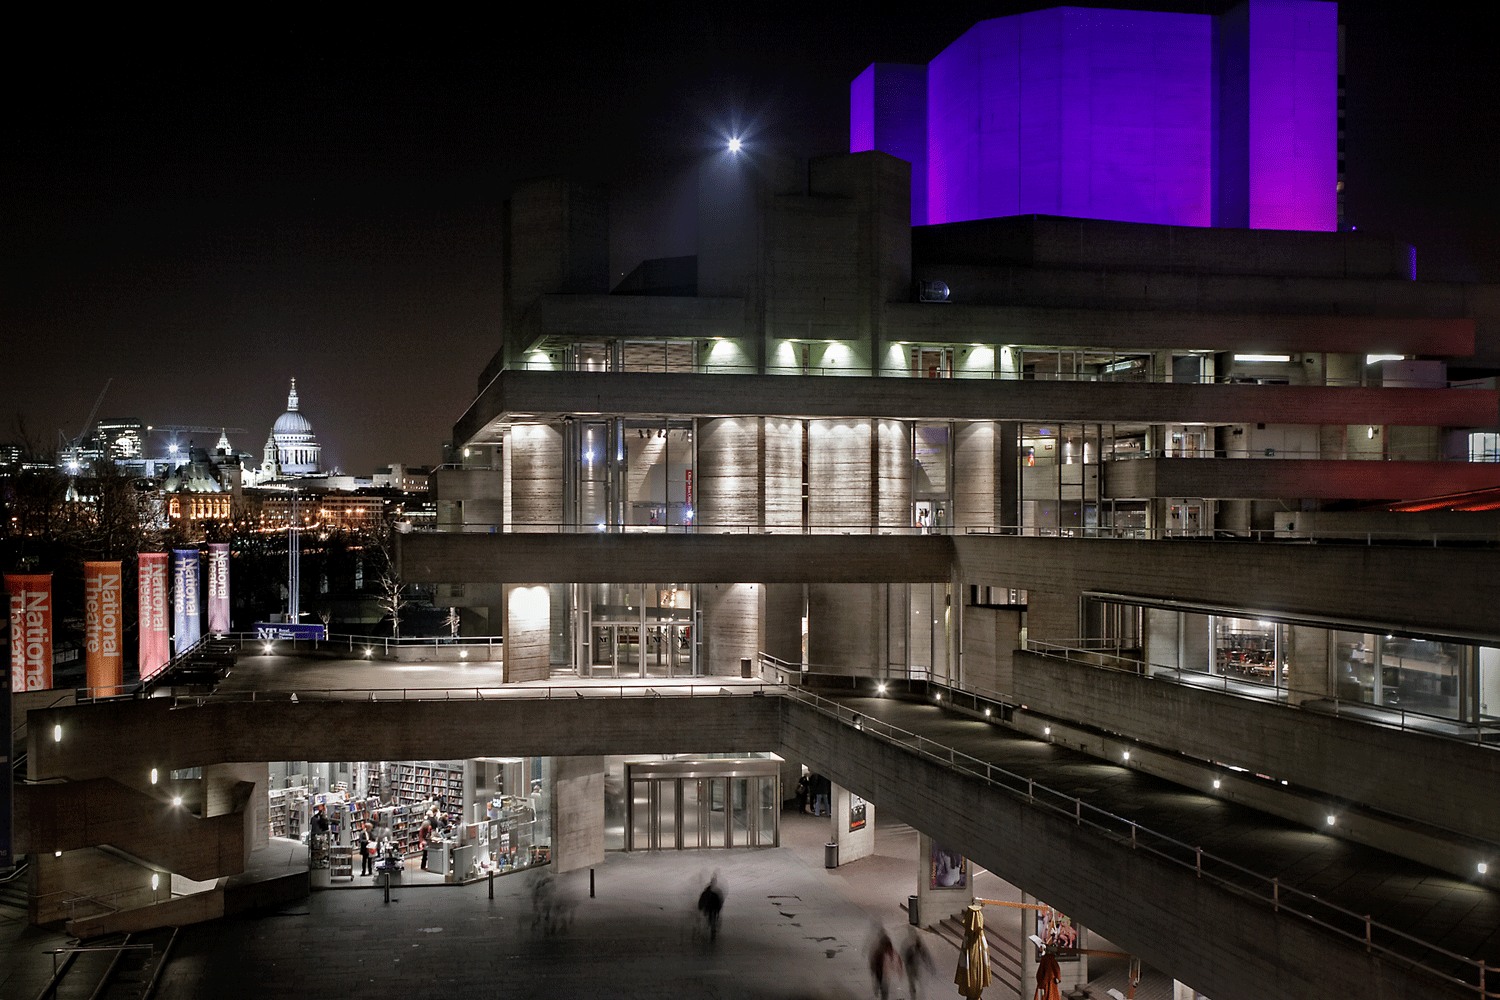 National Theater, London, UK